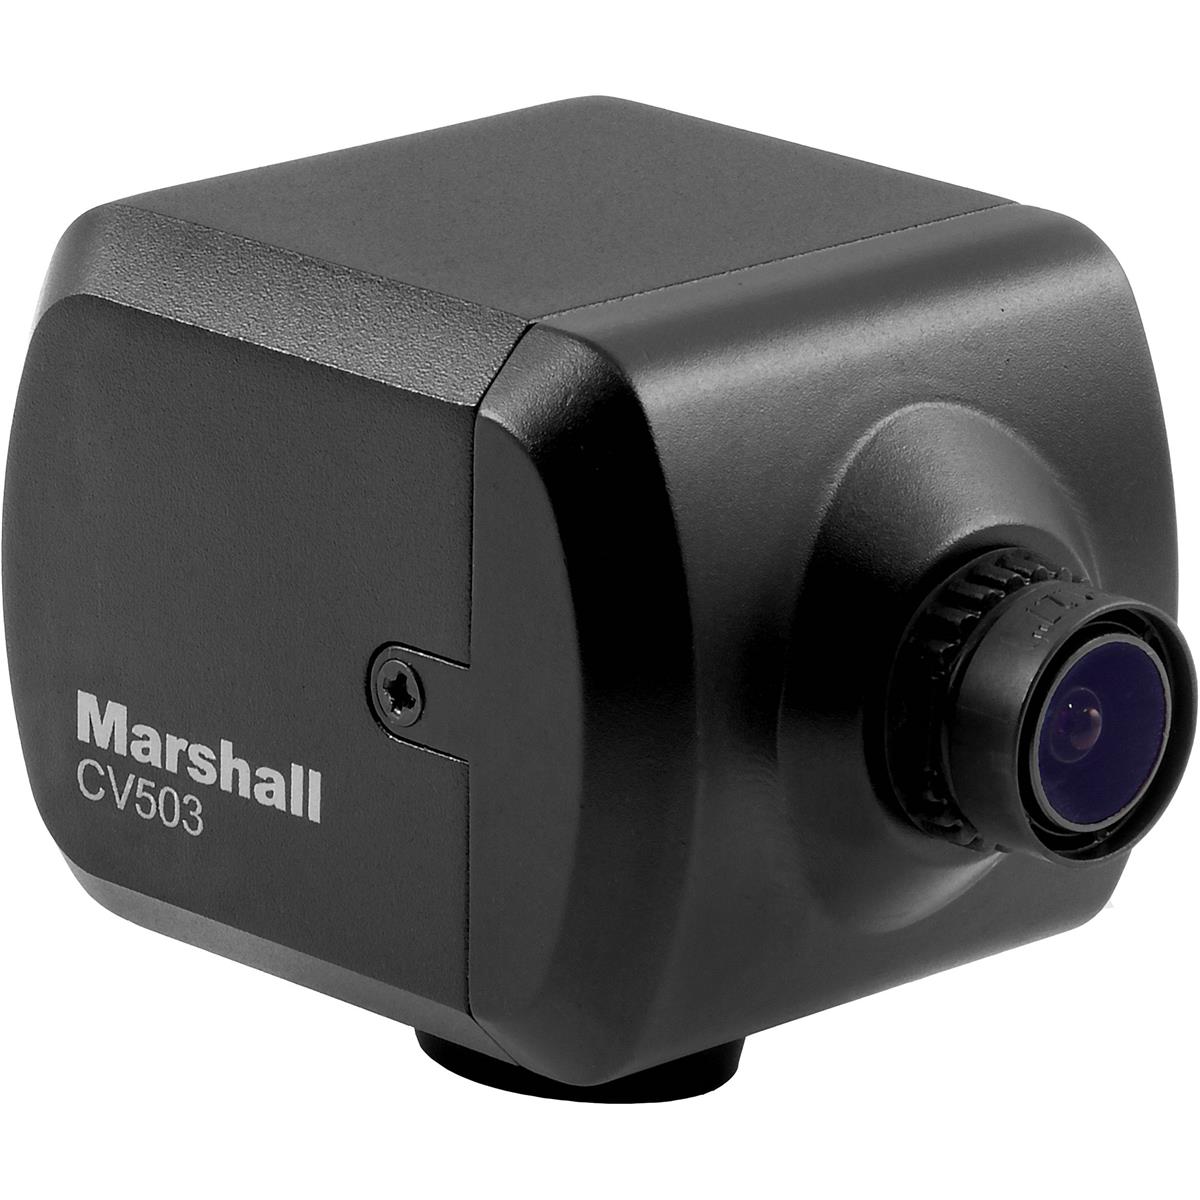 Image of Marshall Electronics CV503 FHD Mini Camera